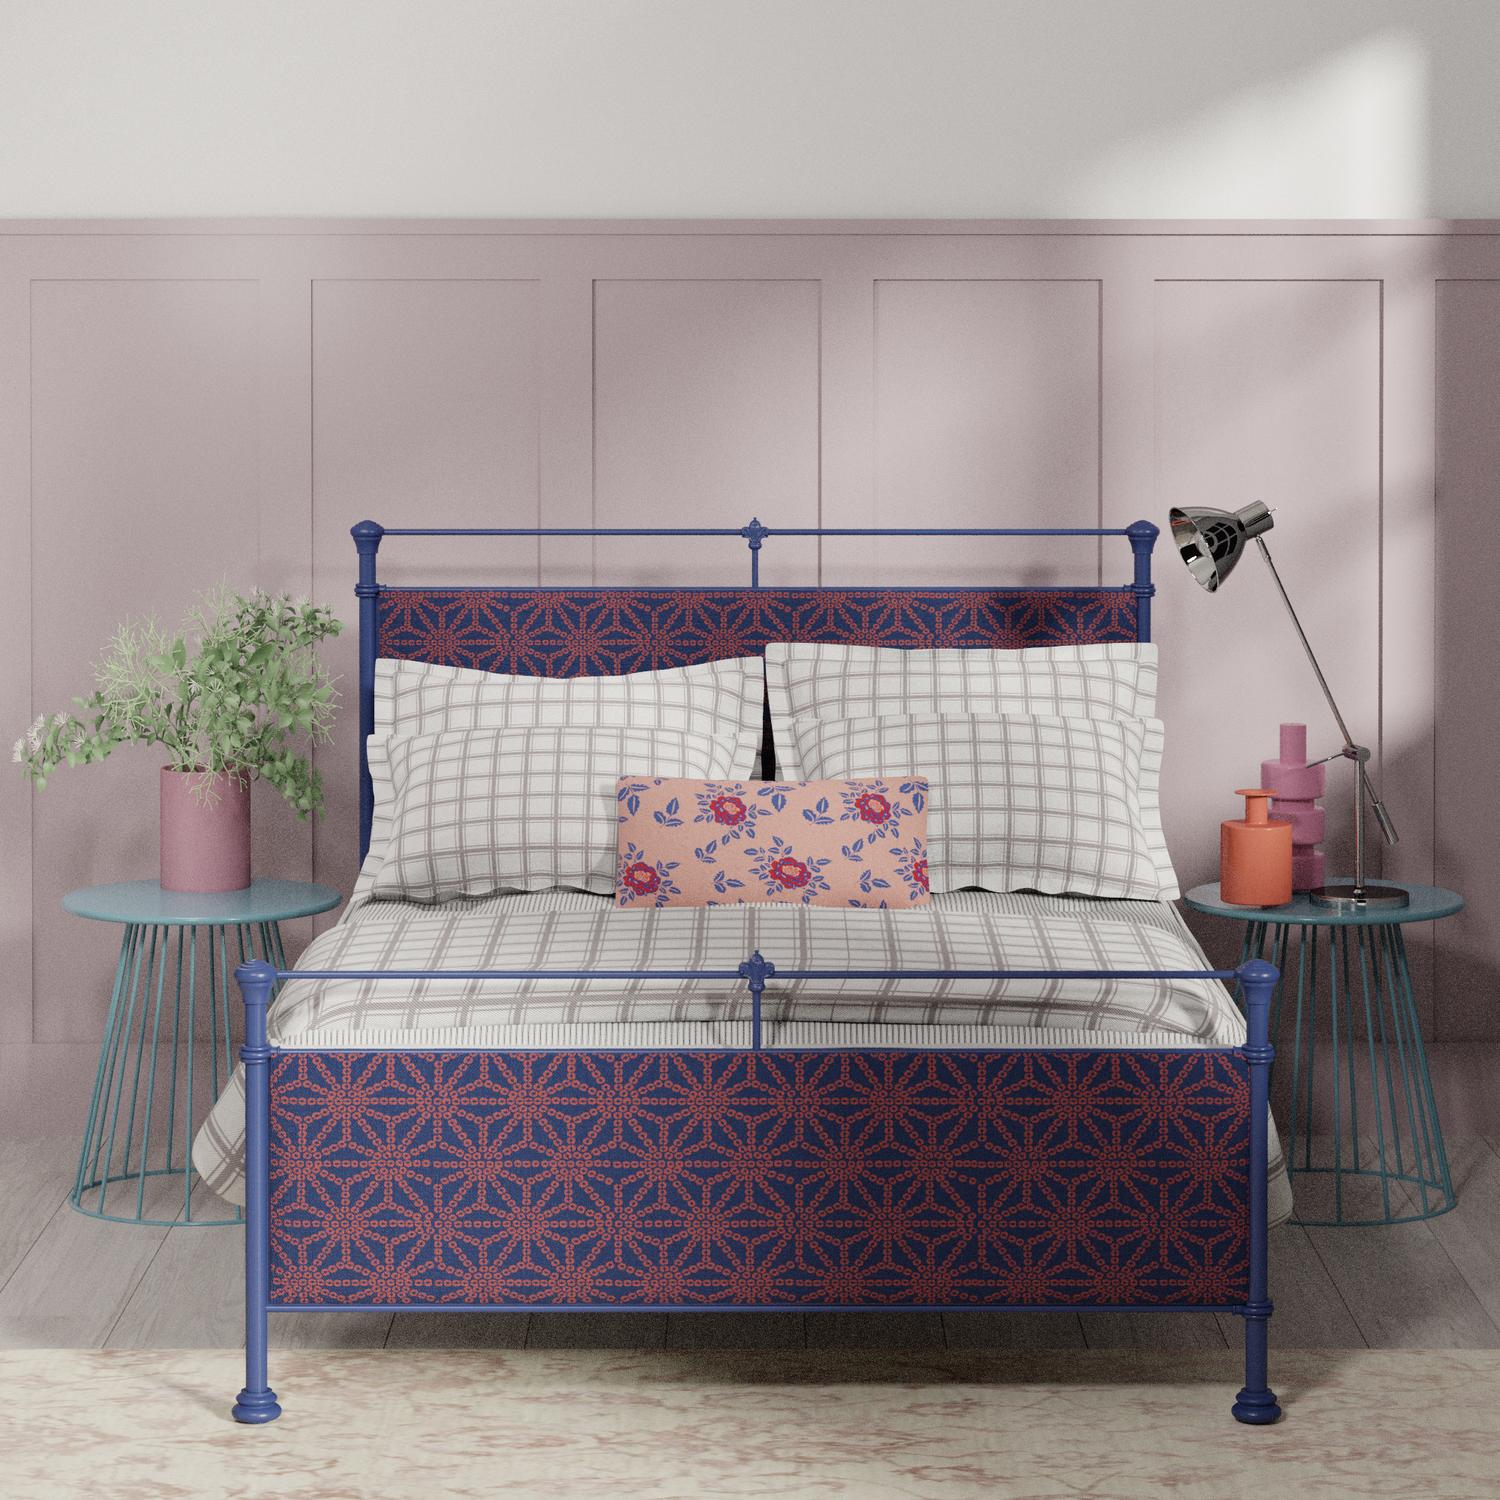 Nancy iron bed - Image blue bedroom